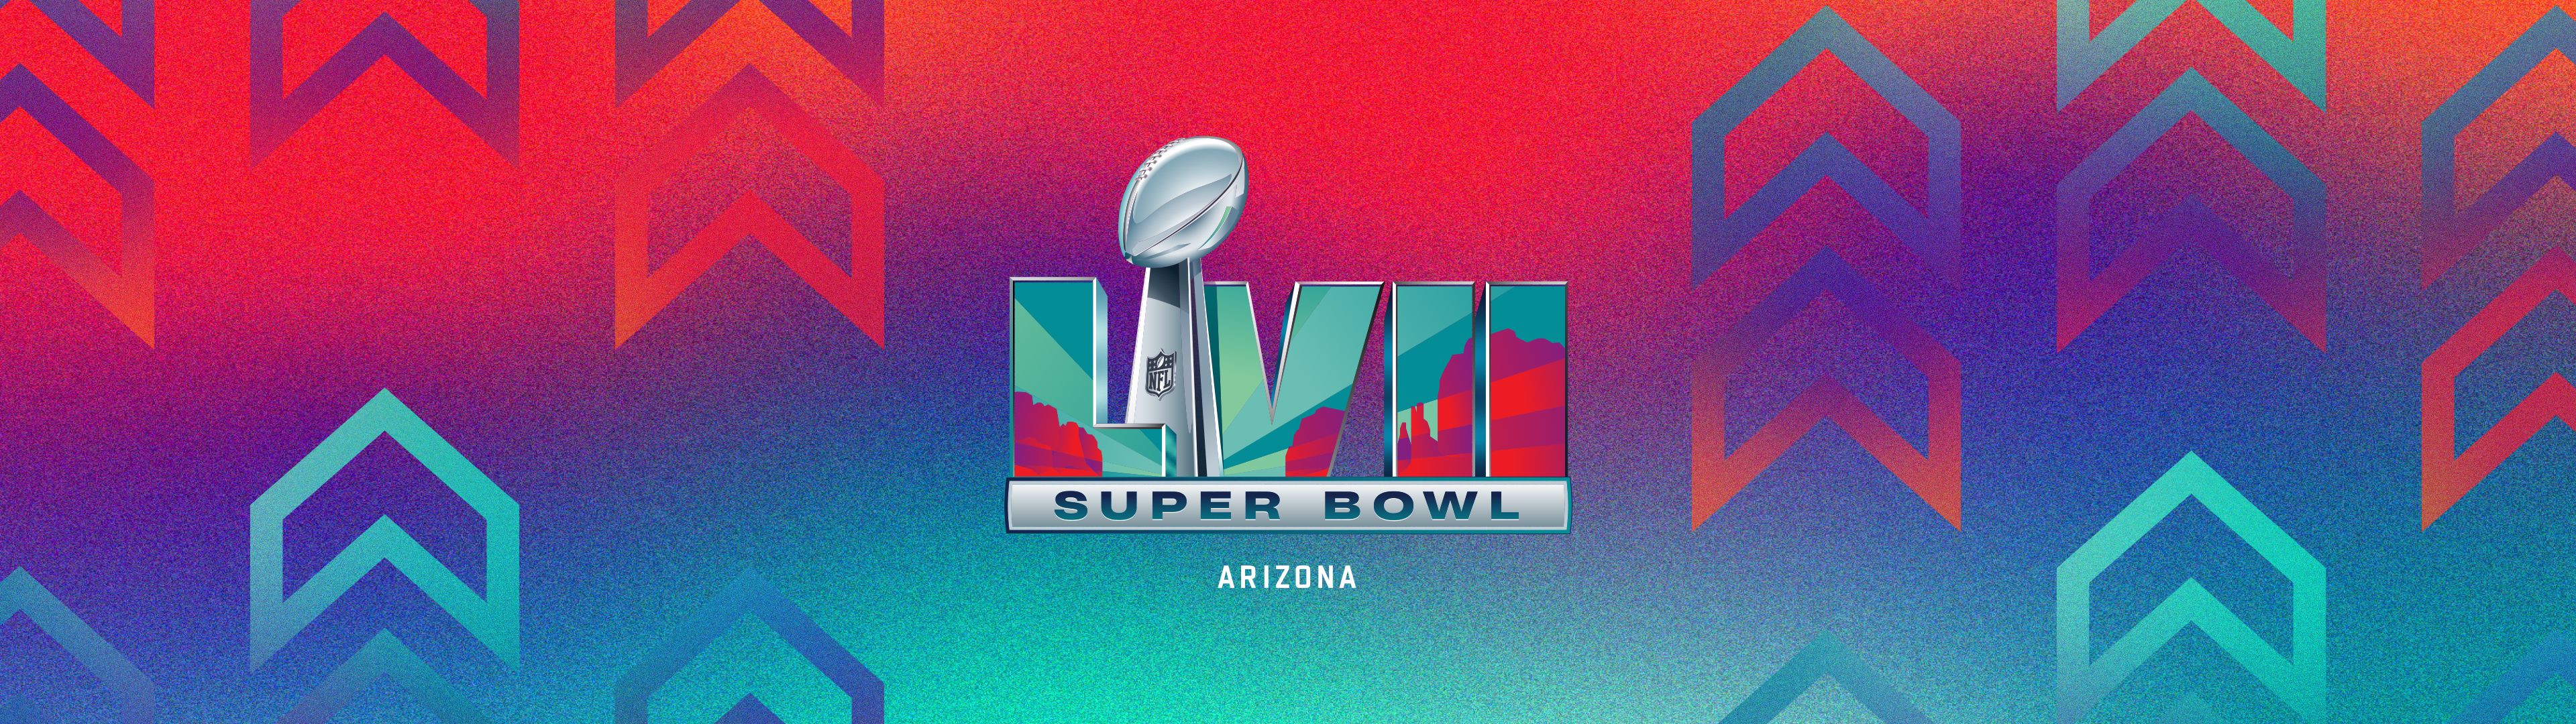 Philadelphia Eagles NFC Champions Super Bowl LVII (2023) Official Prem –  Sports Poster Warehouse